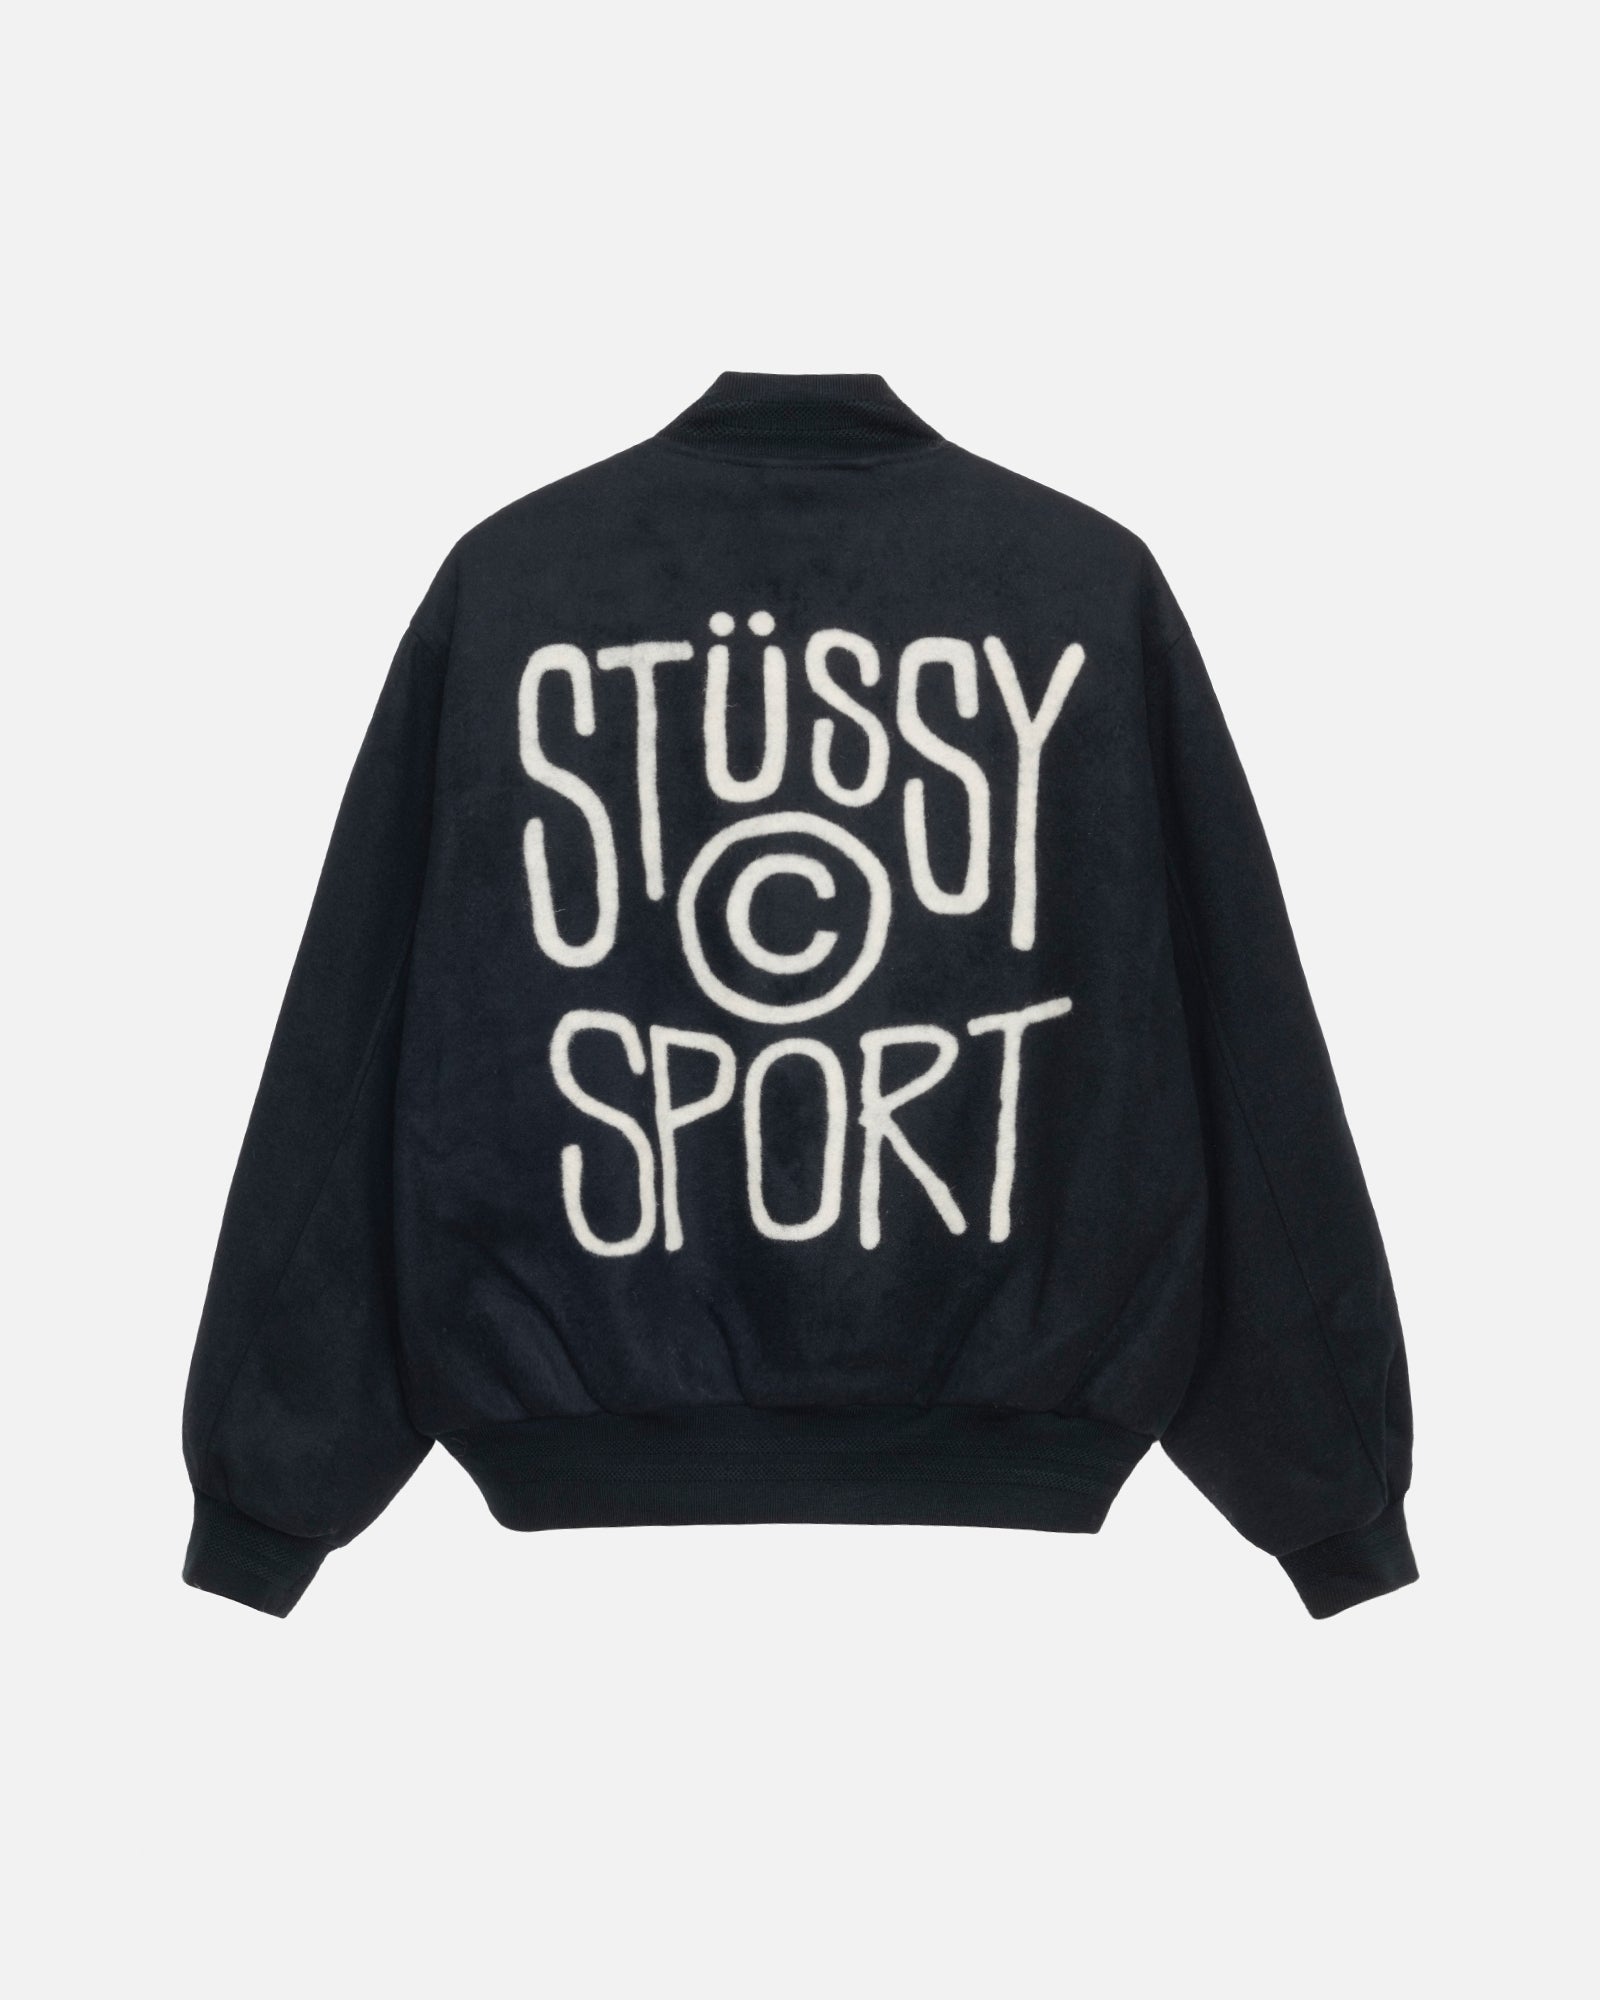 Shop all – Stüssy Europe